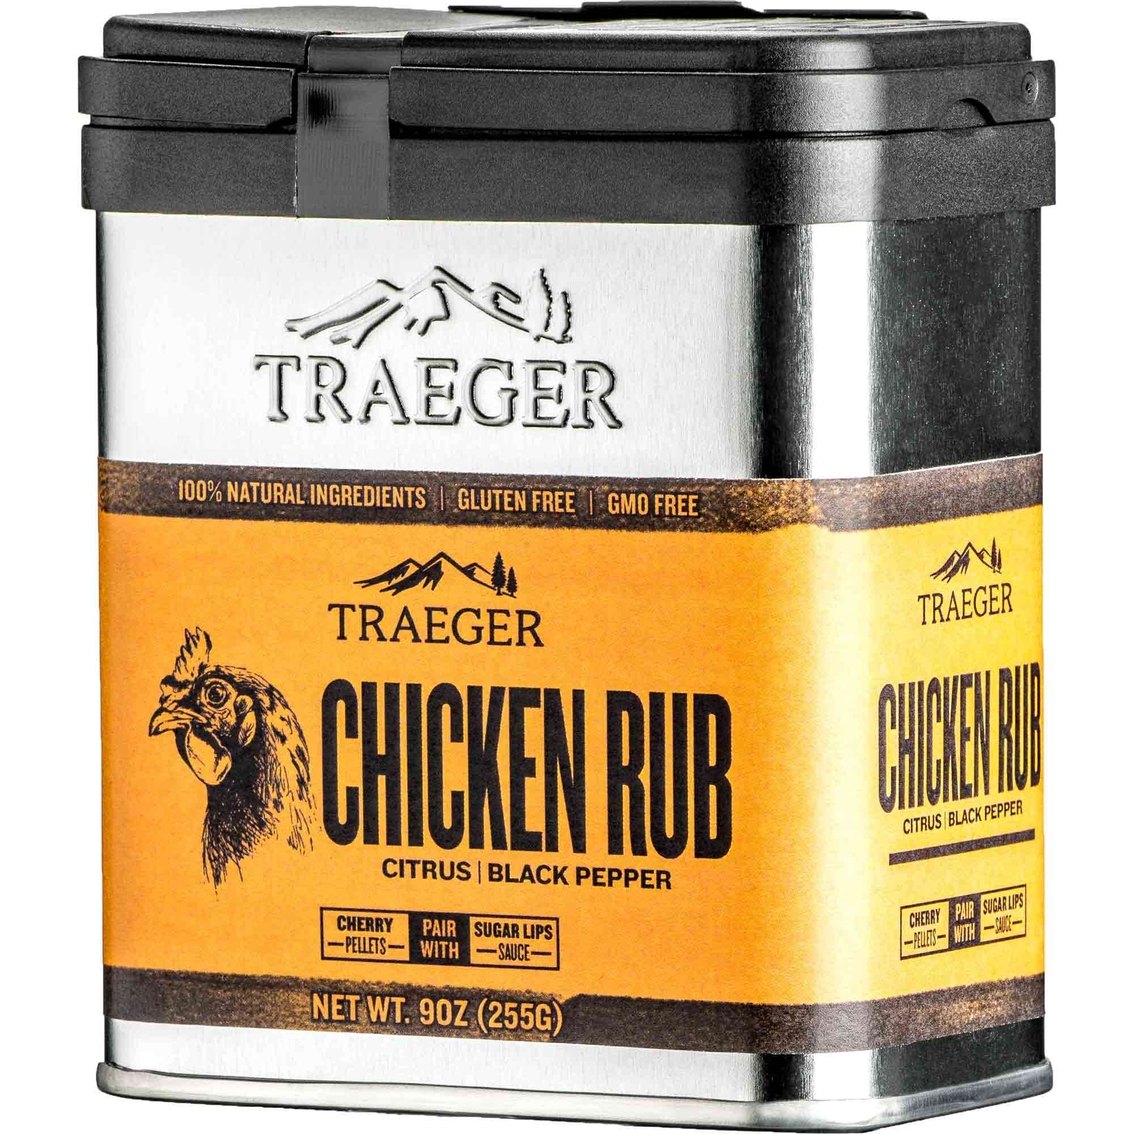 Traeger Chicken Rub 9 oz. - Image 2 of 3